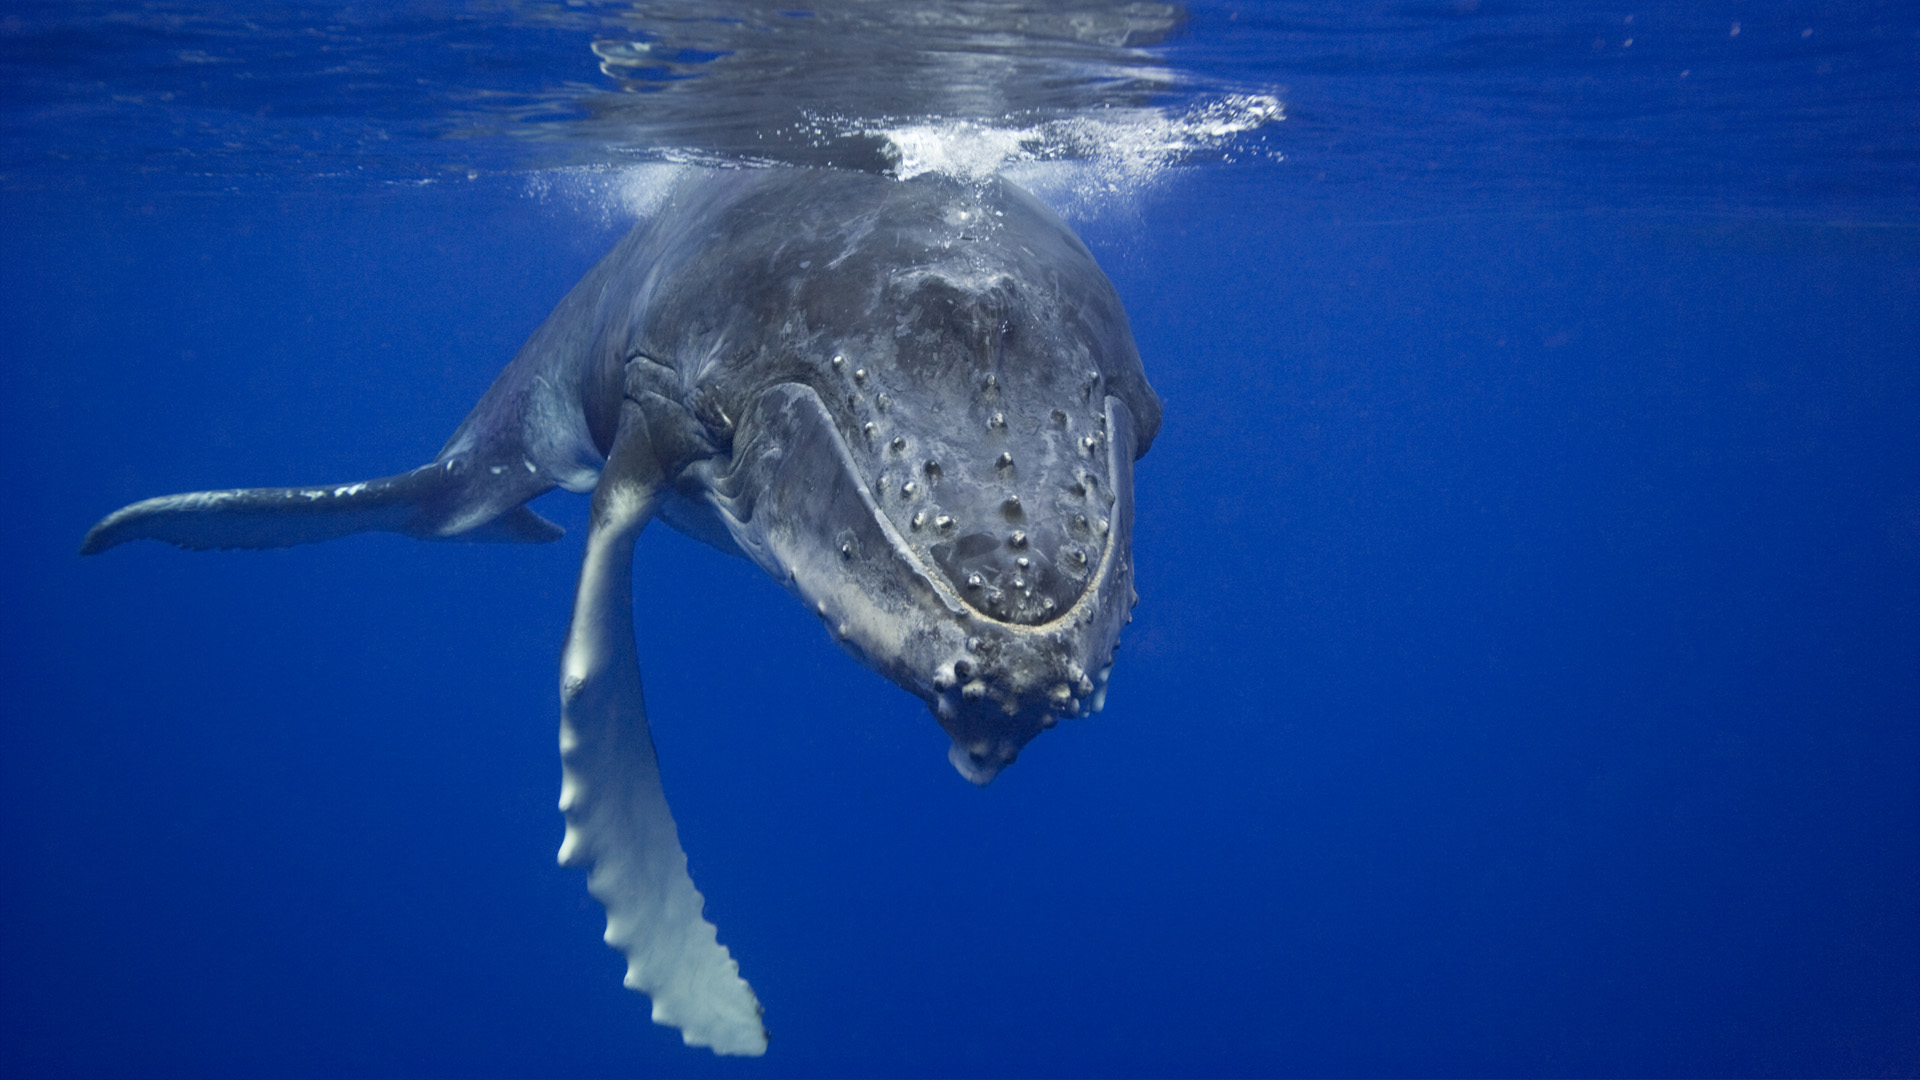 Кит живет в воде. Кит 52 Герца. Кит Горбач. Самый одинокий кит 52 Герца. Горбатый кит Финвал.